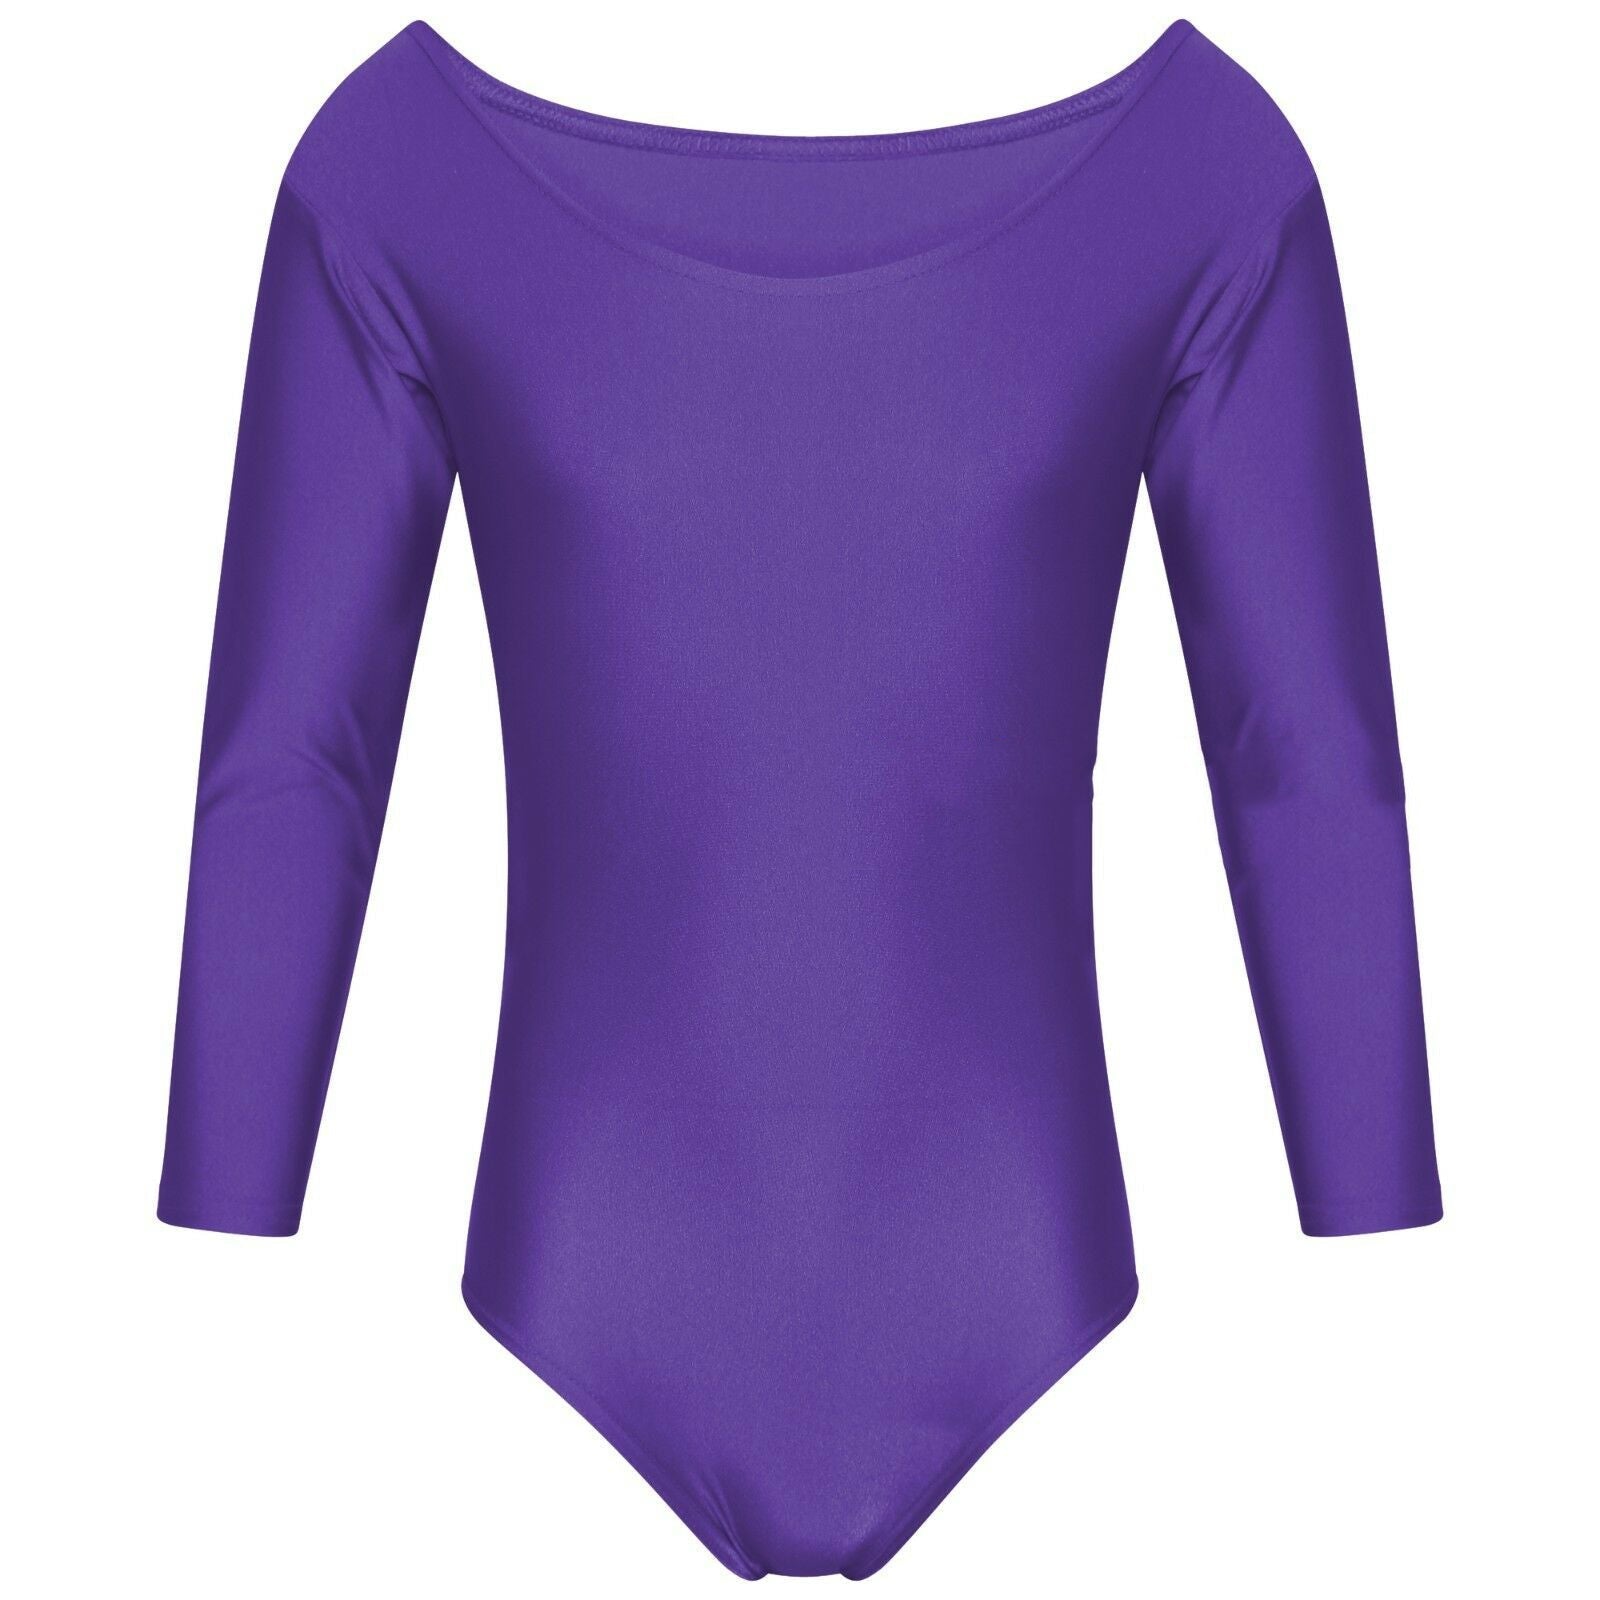 School Uniform of Kids Girls Leotard Long Sleeve Sports Gymnastics Ballet Dance -Purple